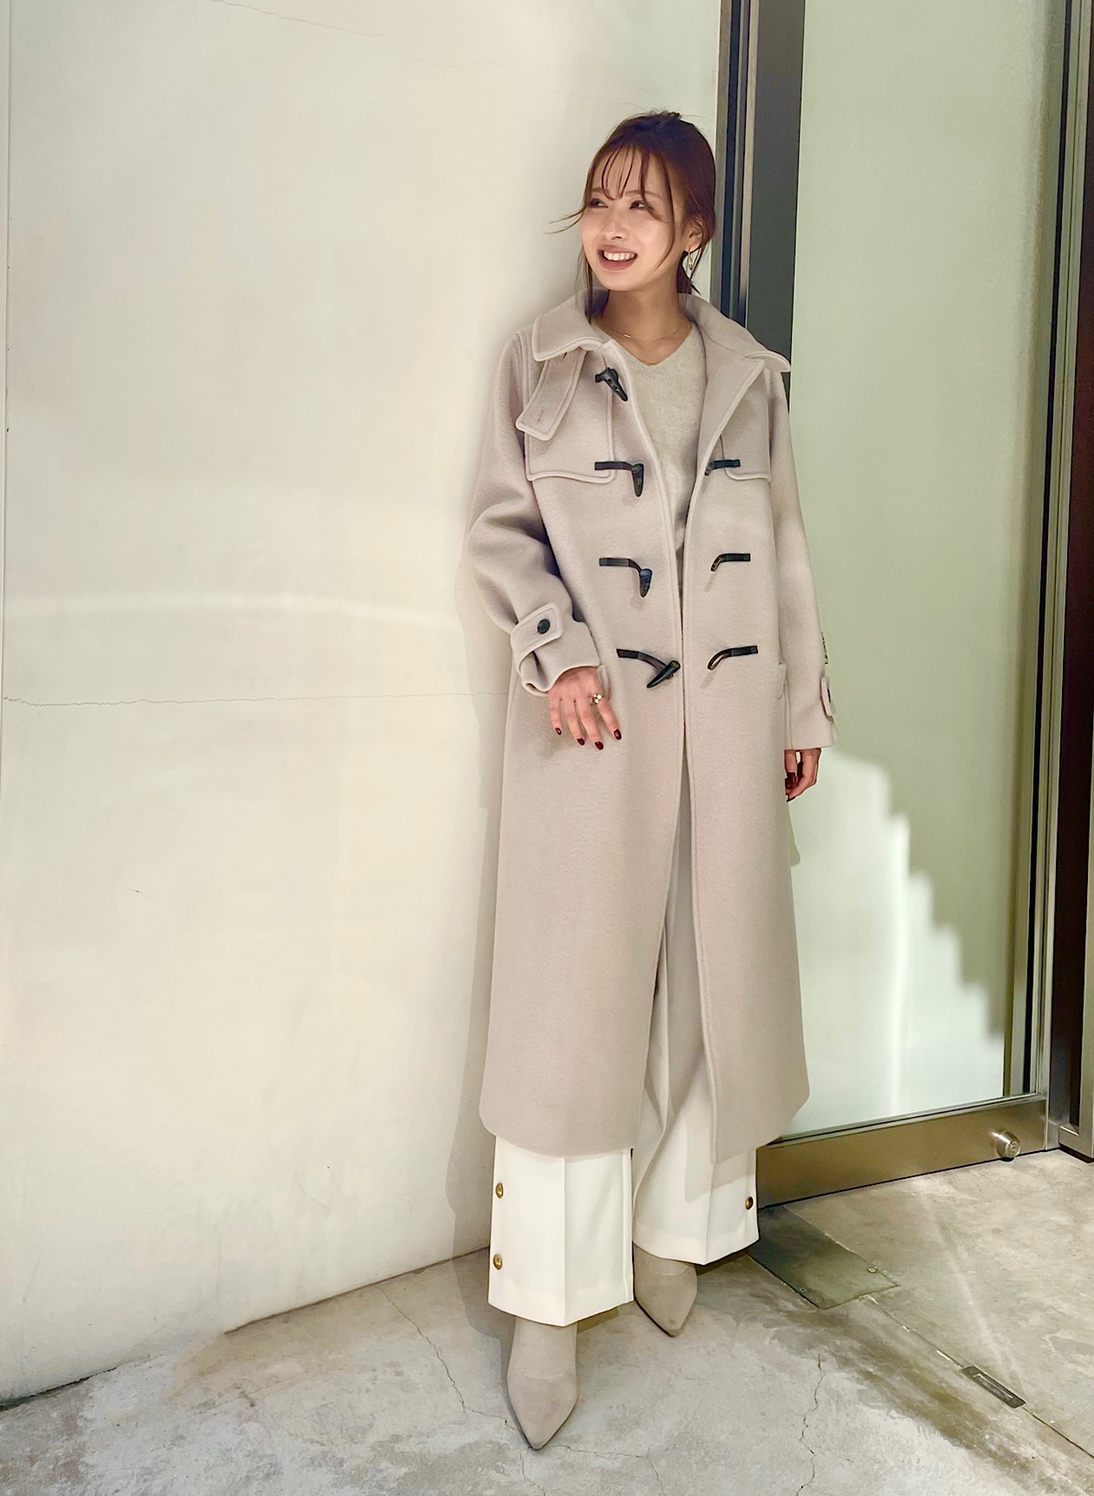 【used】greige-color long duffel-coat114cm袖丈